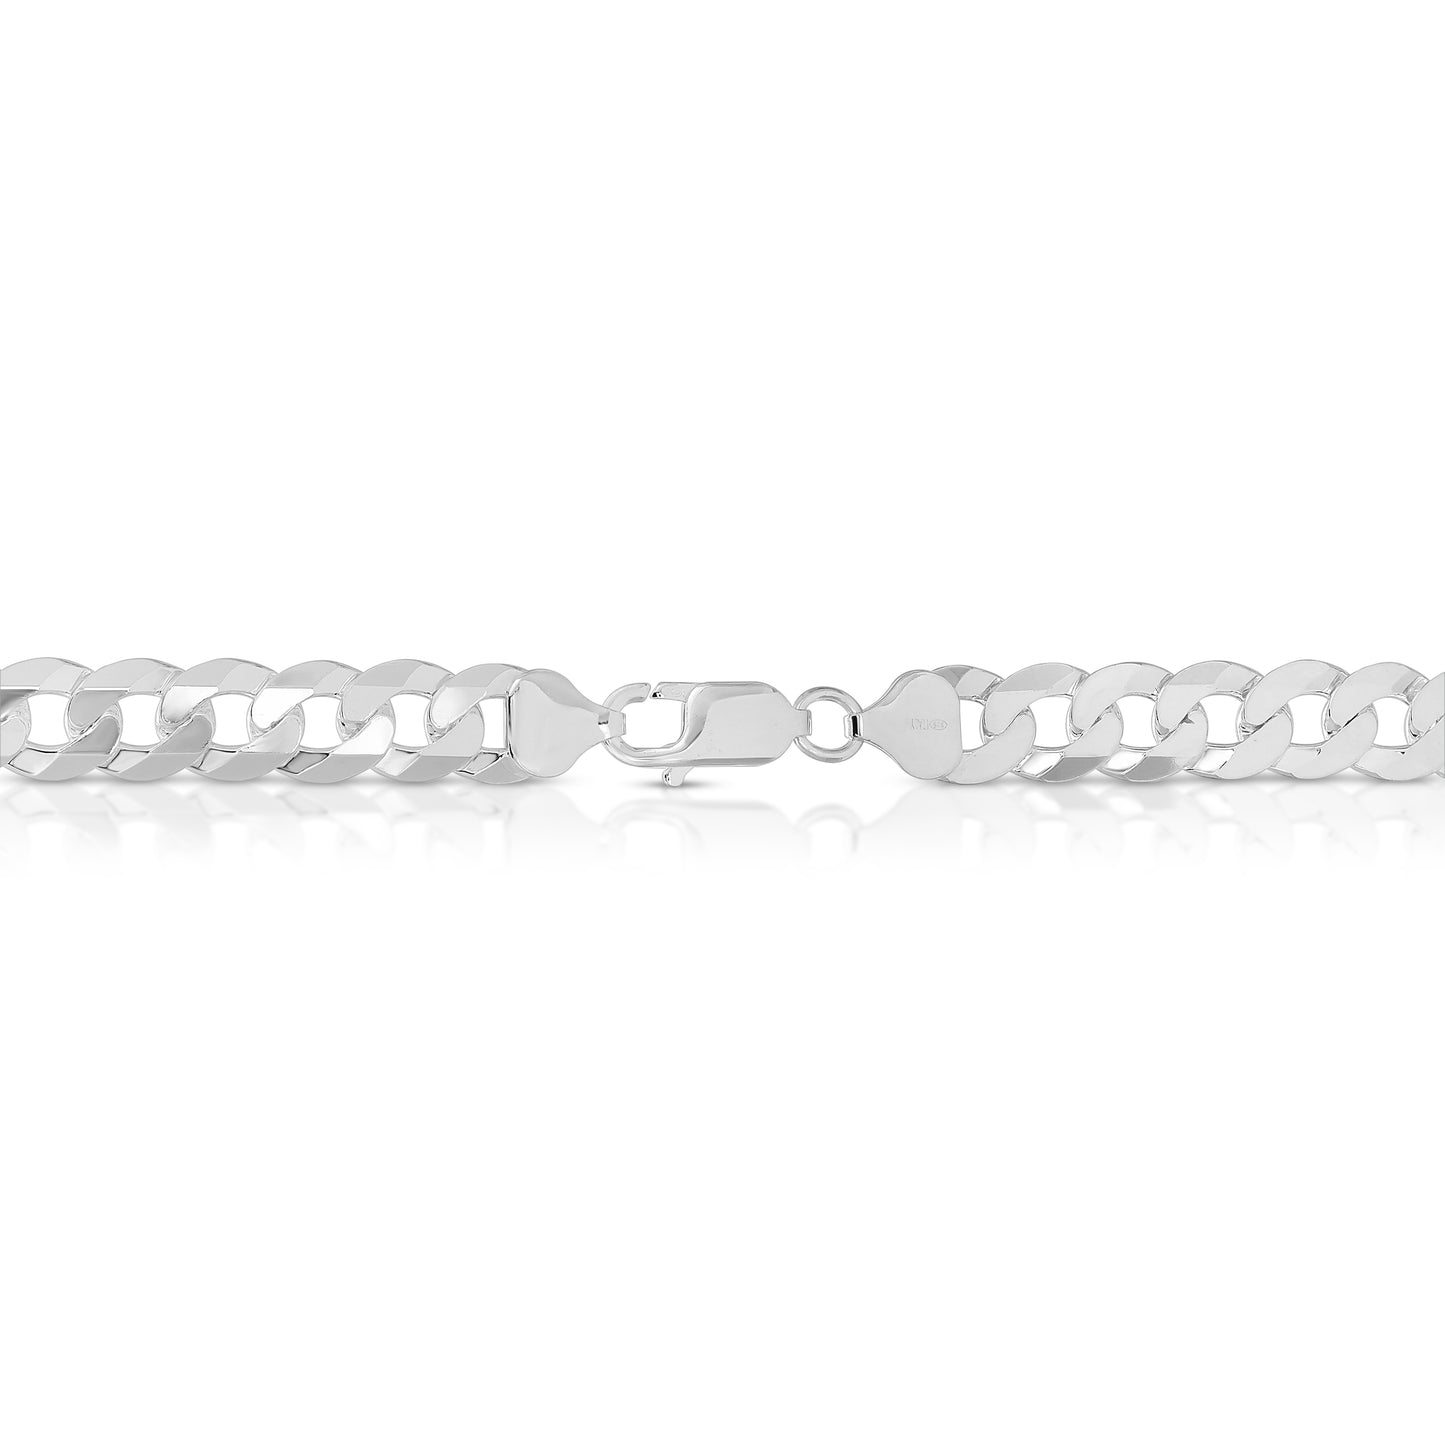 Small Silver Curb Chain 4mm Silver Necklace Slick Chain Men's